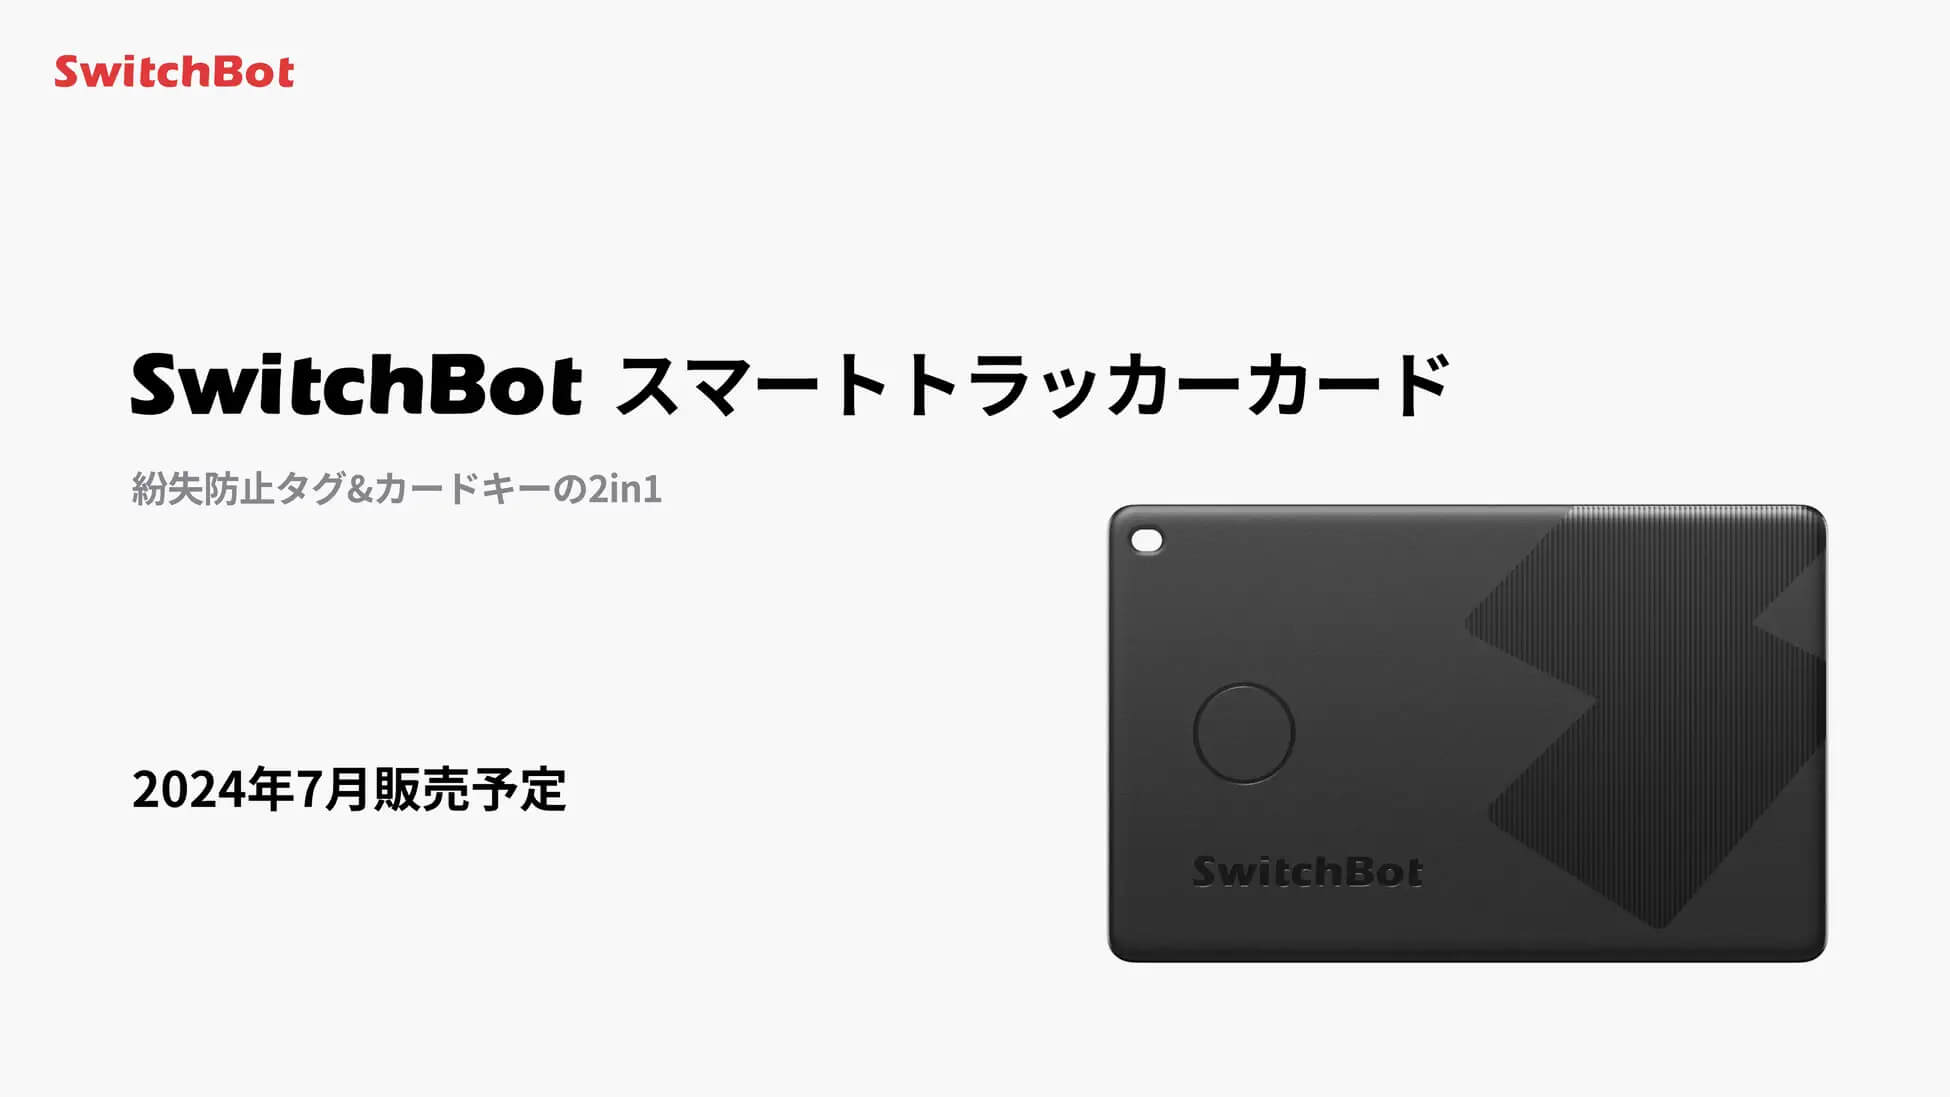 SwitchBot、紛失防止タグ&カードキーになる｢スマートトラッカーカード｣を7月に発売へ